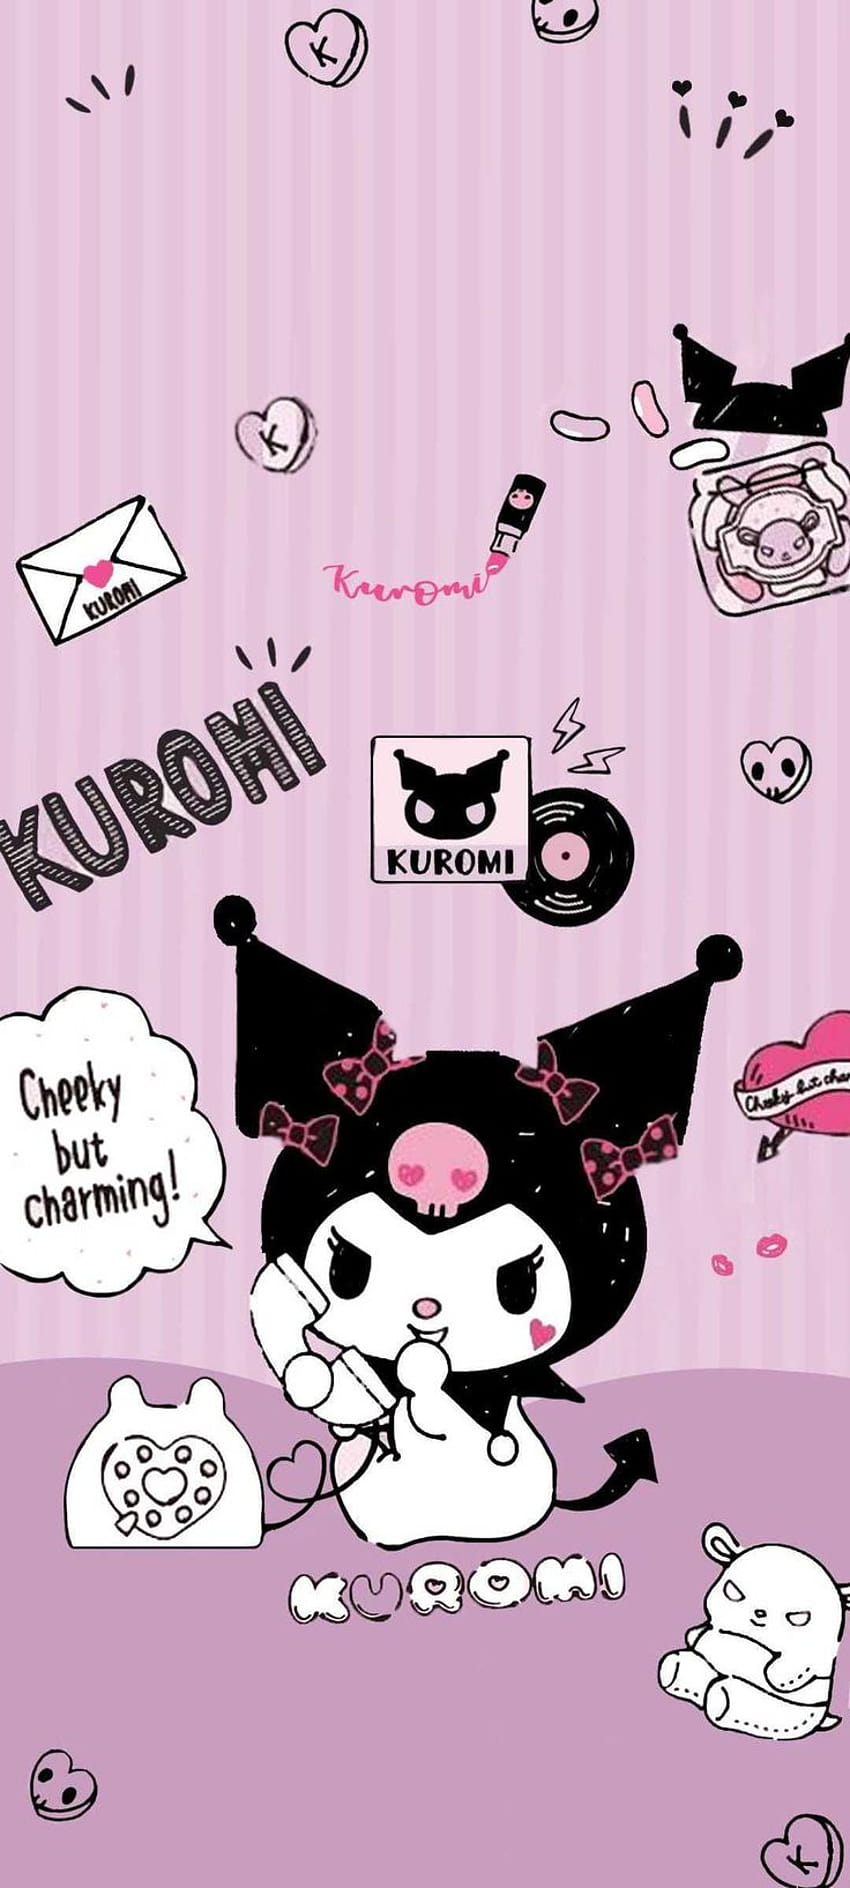 Kawaii wallpaper for desktop - Sanrio, Kuromi